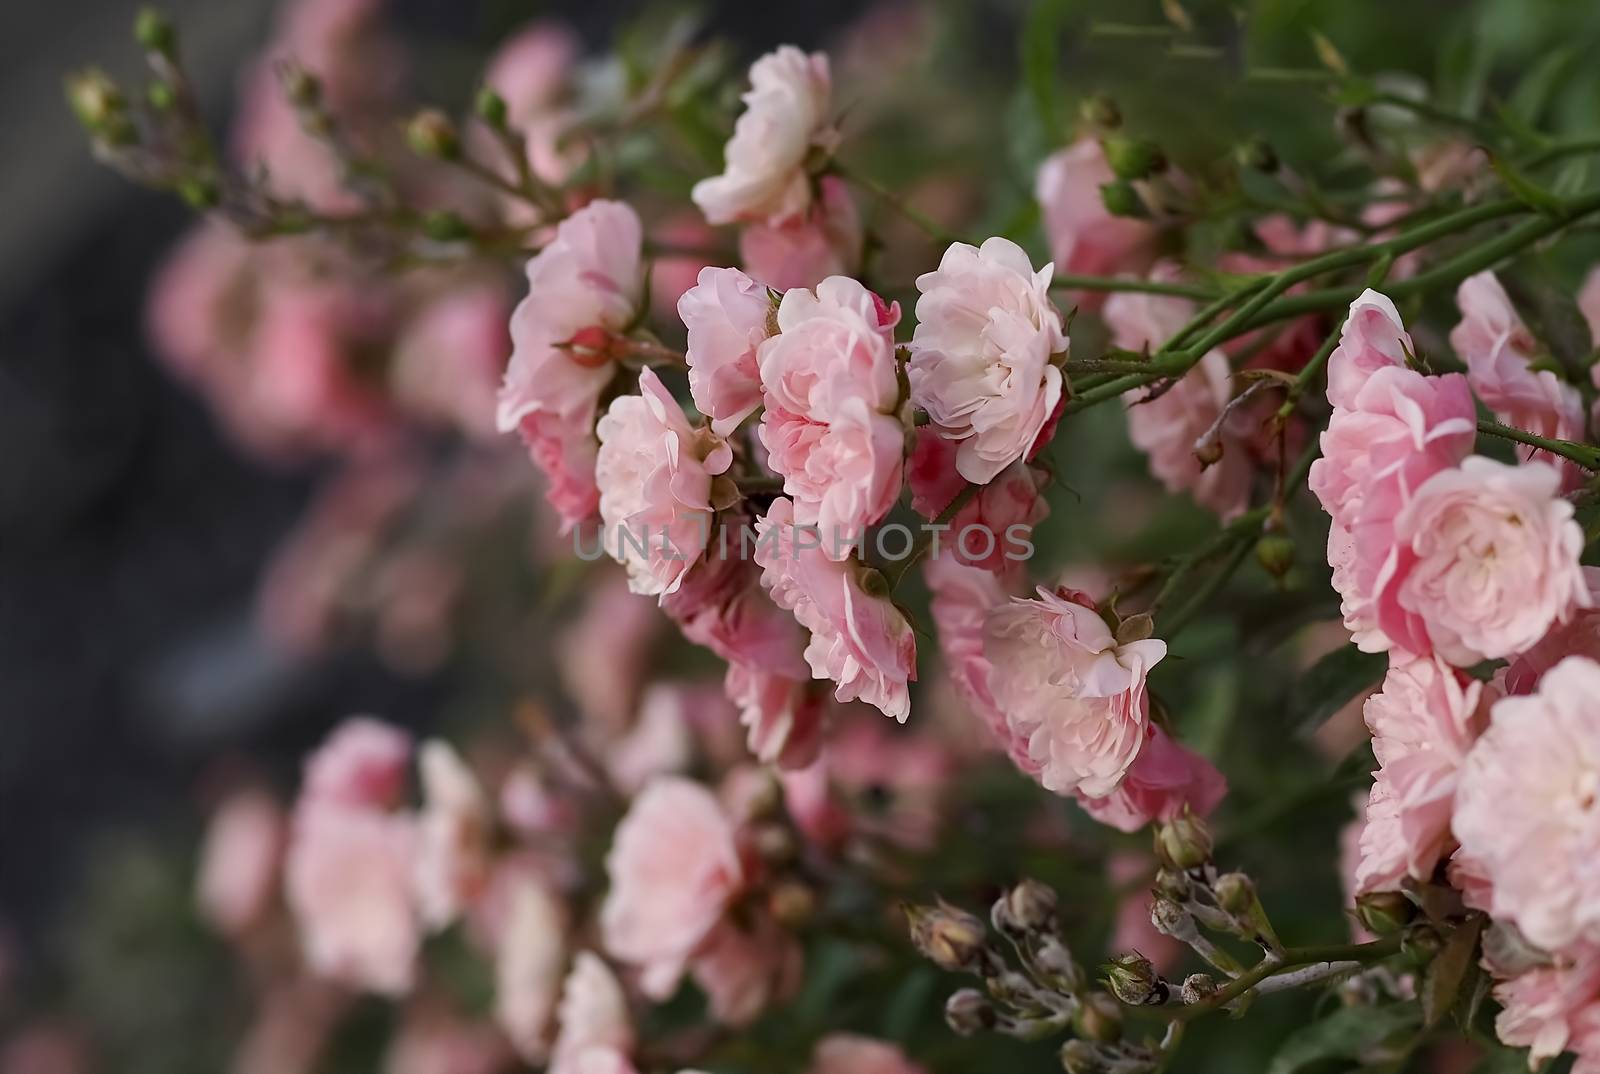 Many pink roses on a rose bush in a garden by Stimmungsbilder